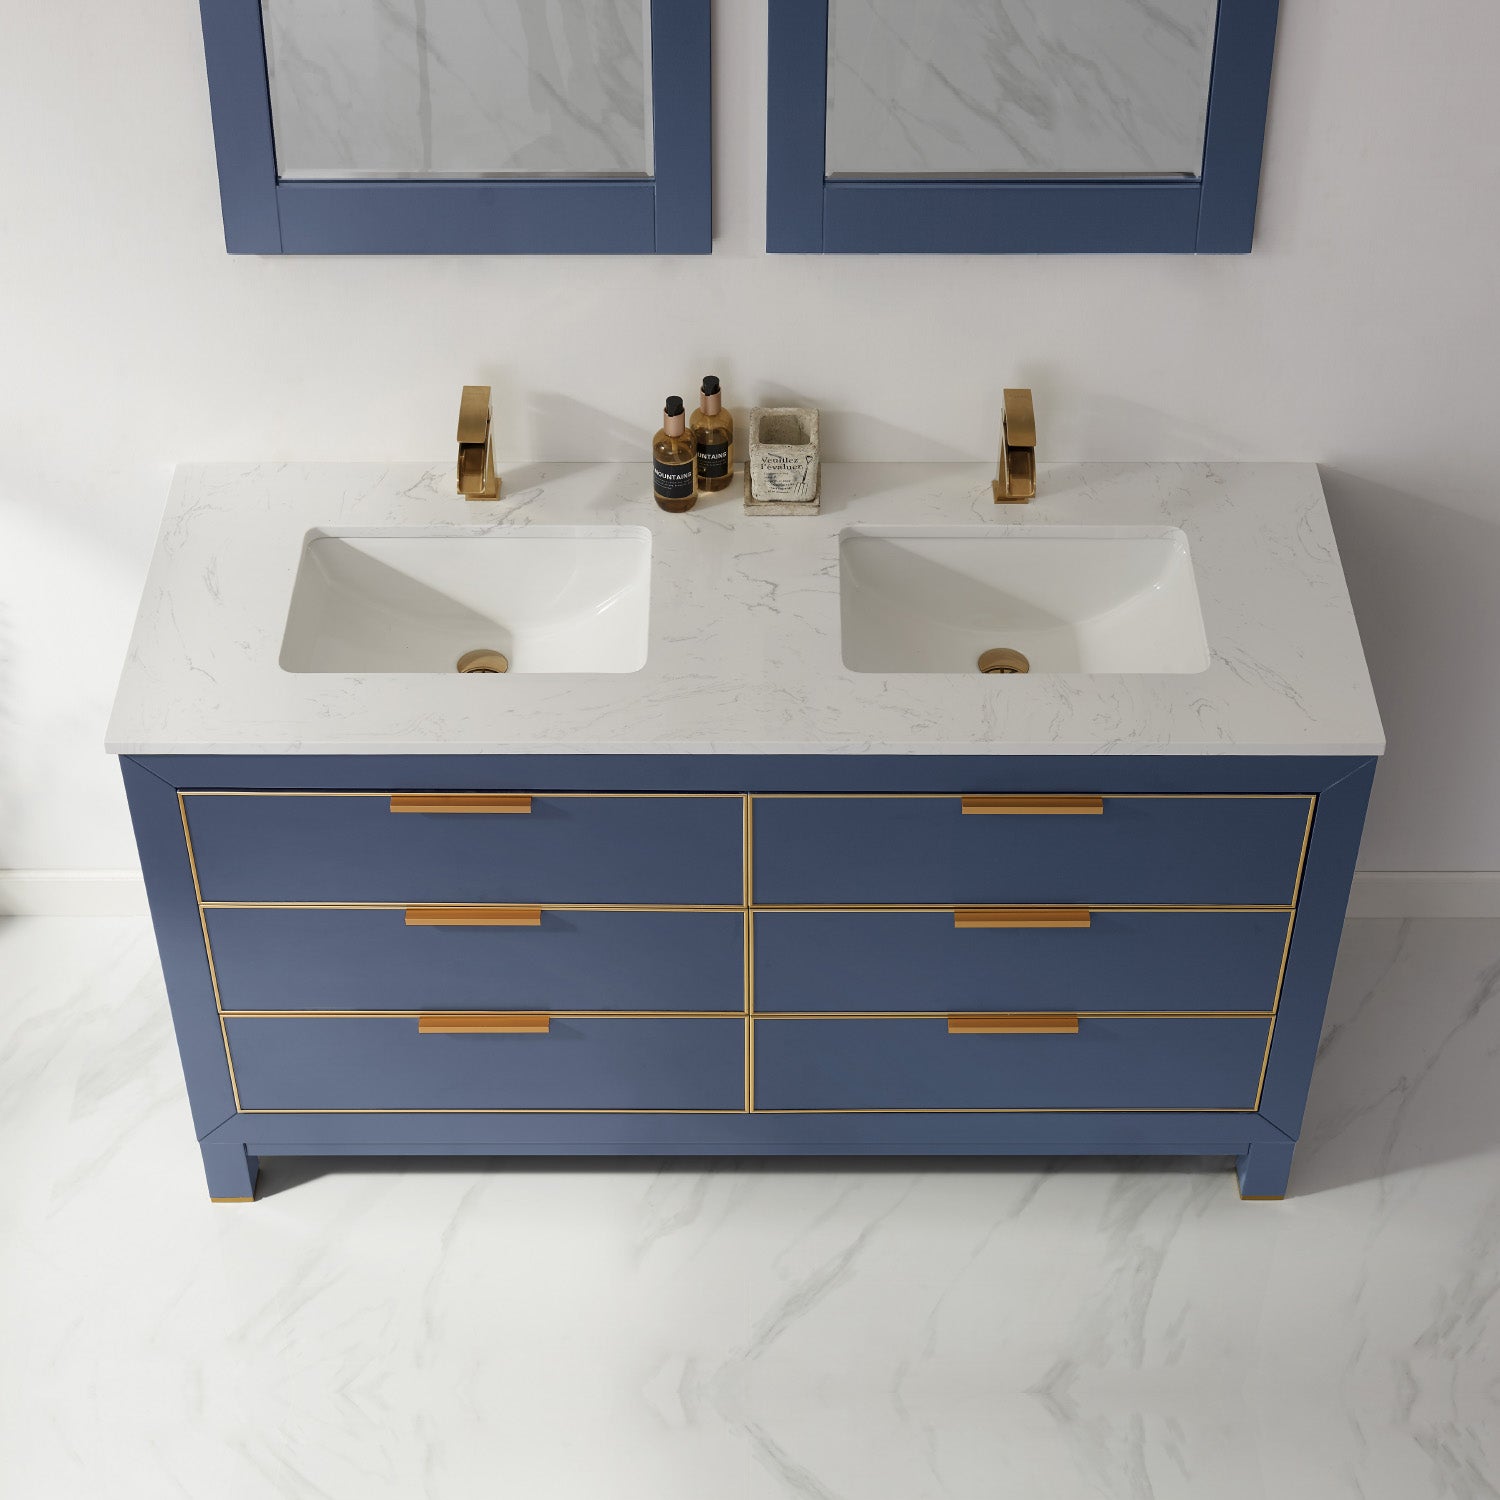 Jackson 60" Double Bathroom Vanity Set with Composite Stone Countertop